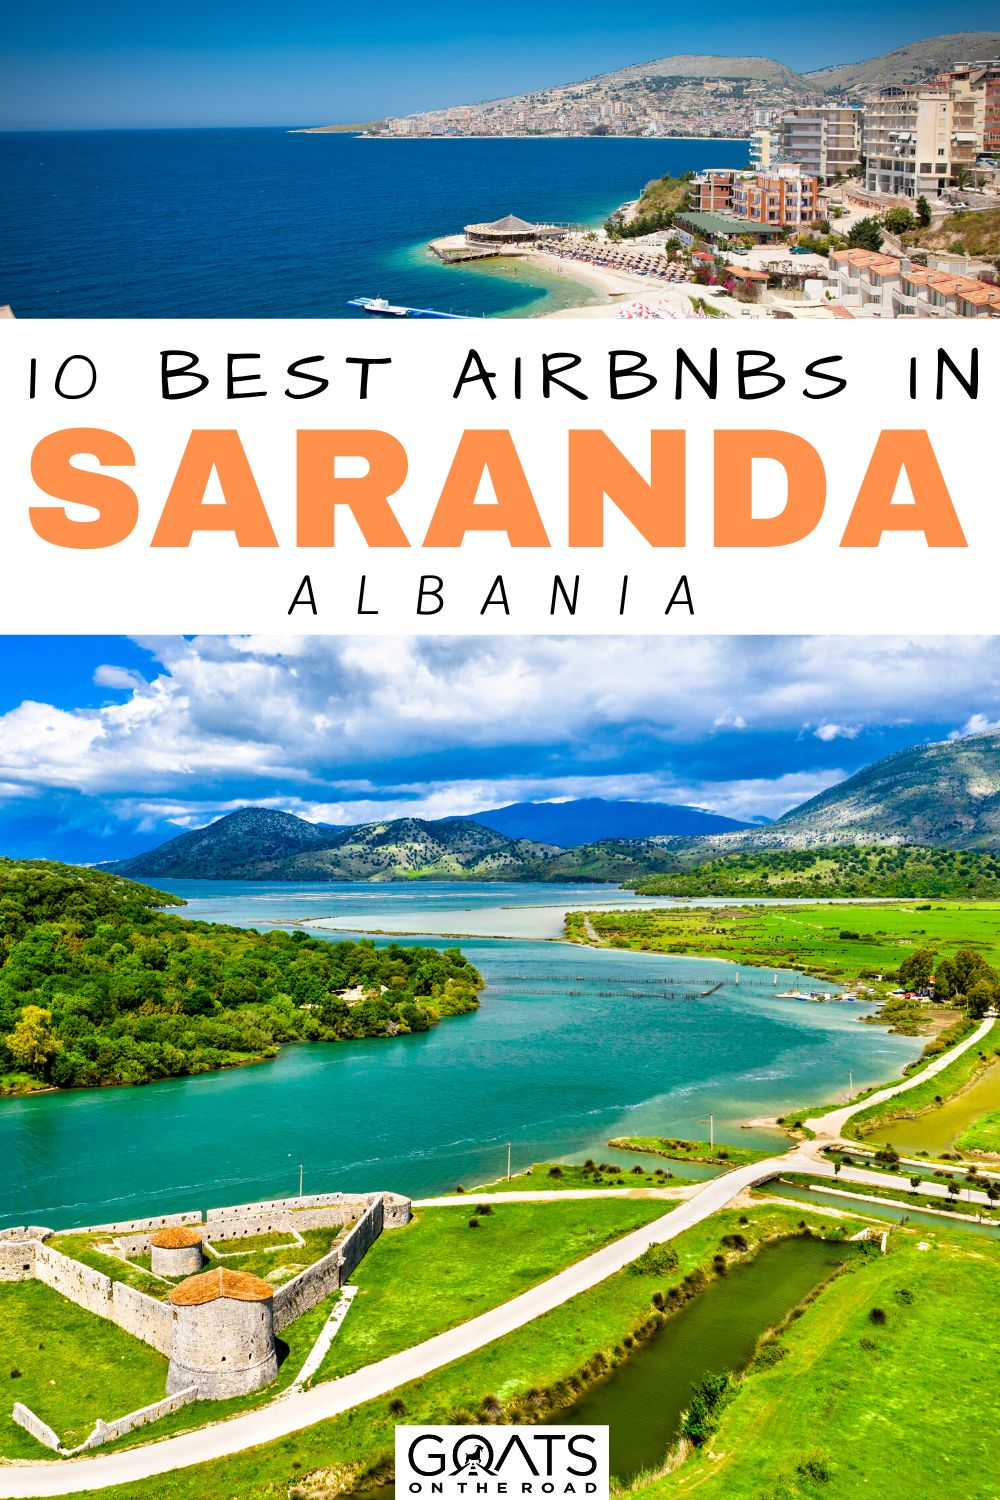 “10 Best Airbnbs in Saranda, Albania